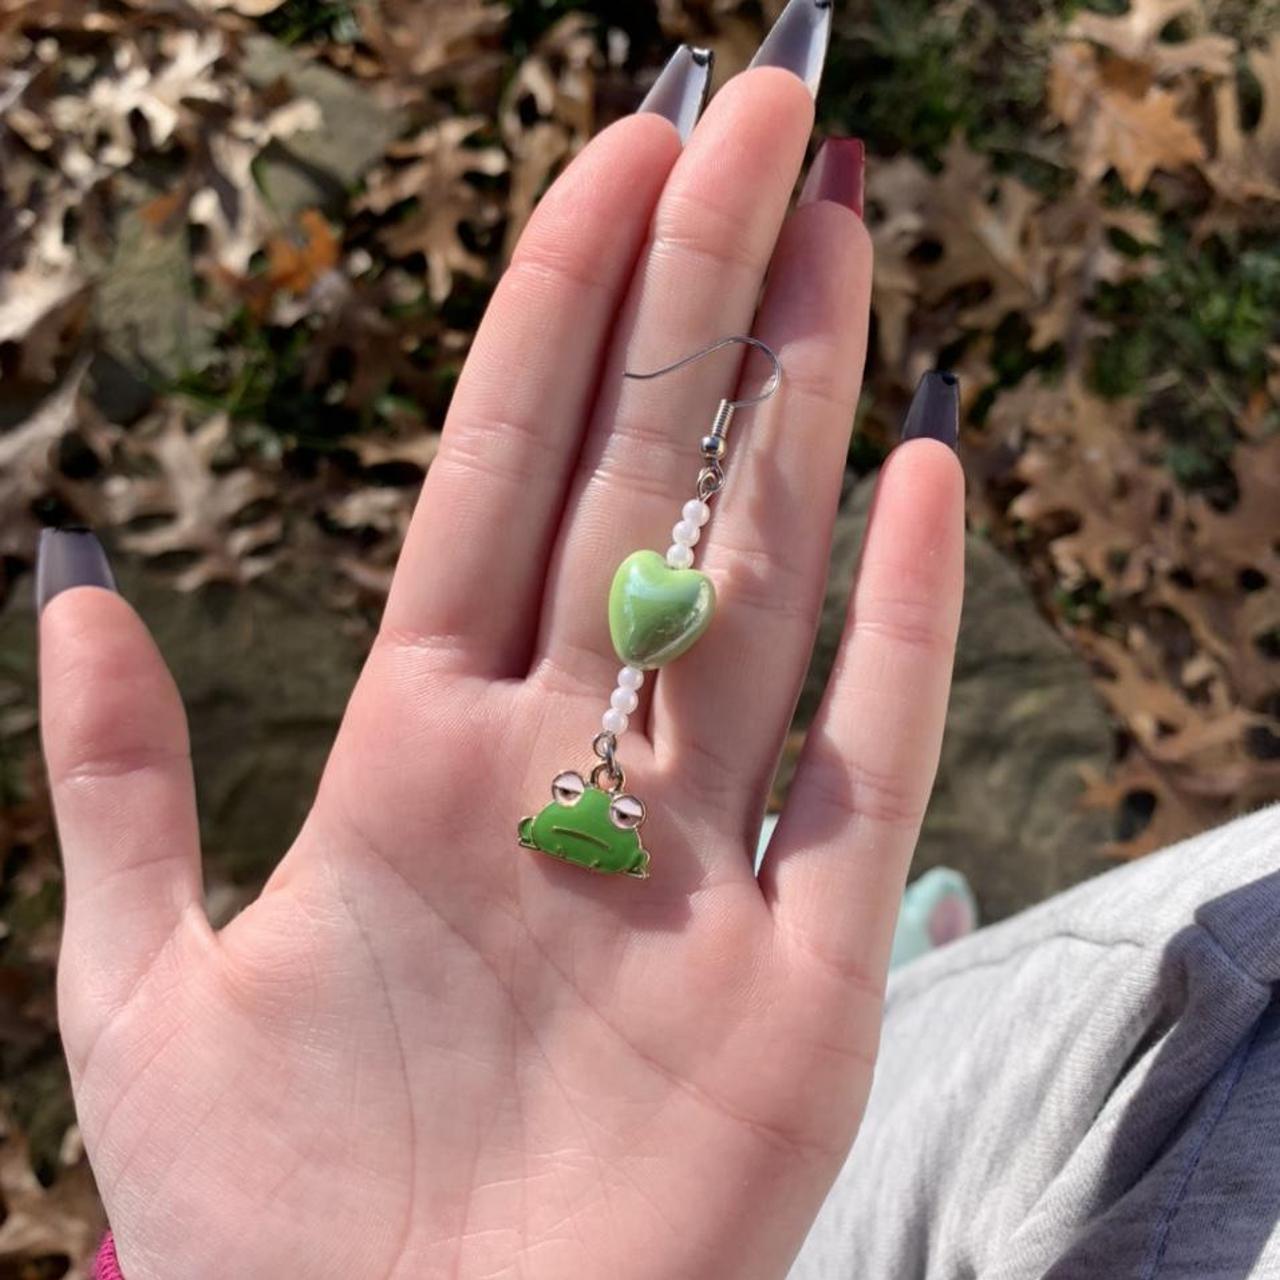 Product Image 2 - The froggy heartache earrings! 🦋

Handmade